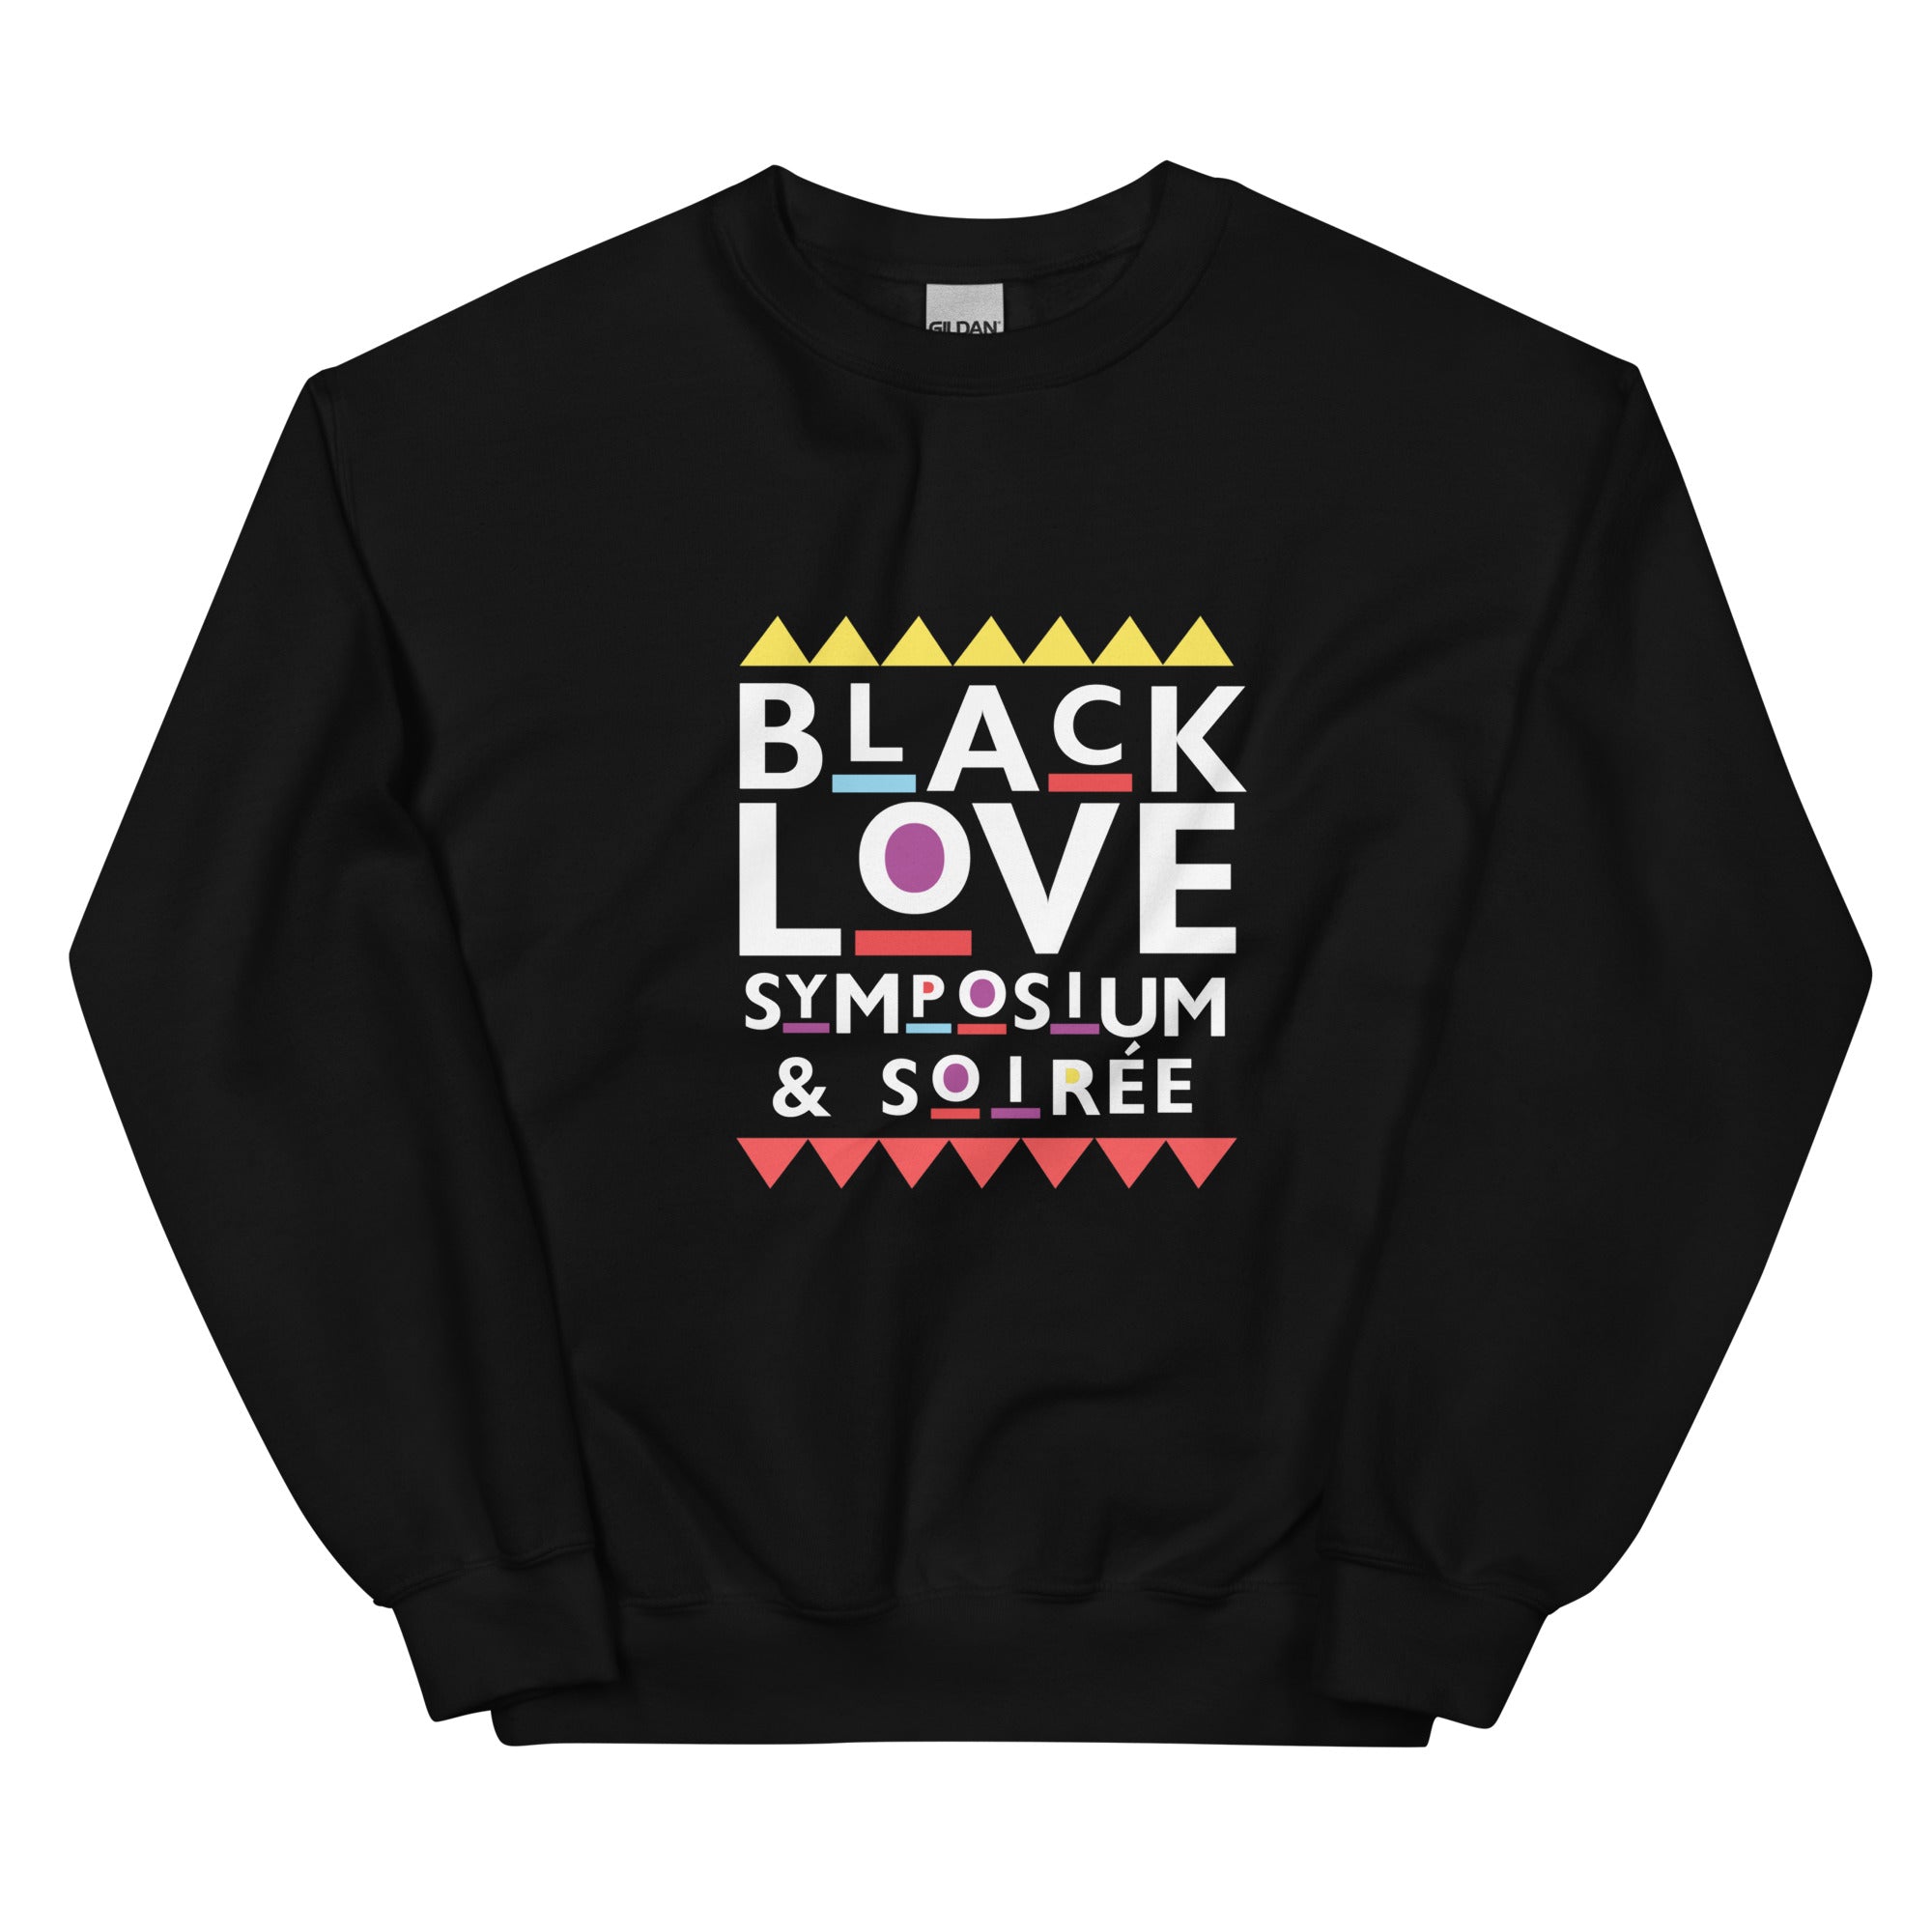 Black Love Symposium & Soirée Unisex Sweatshirt